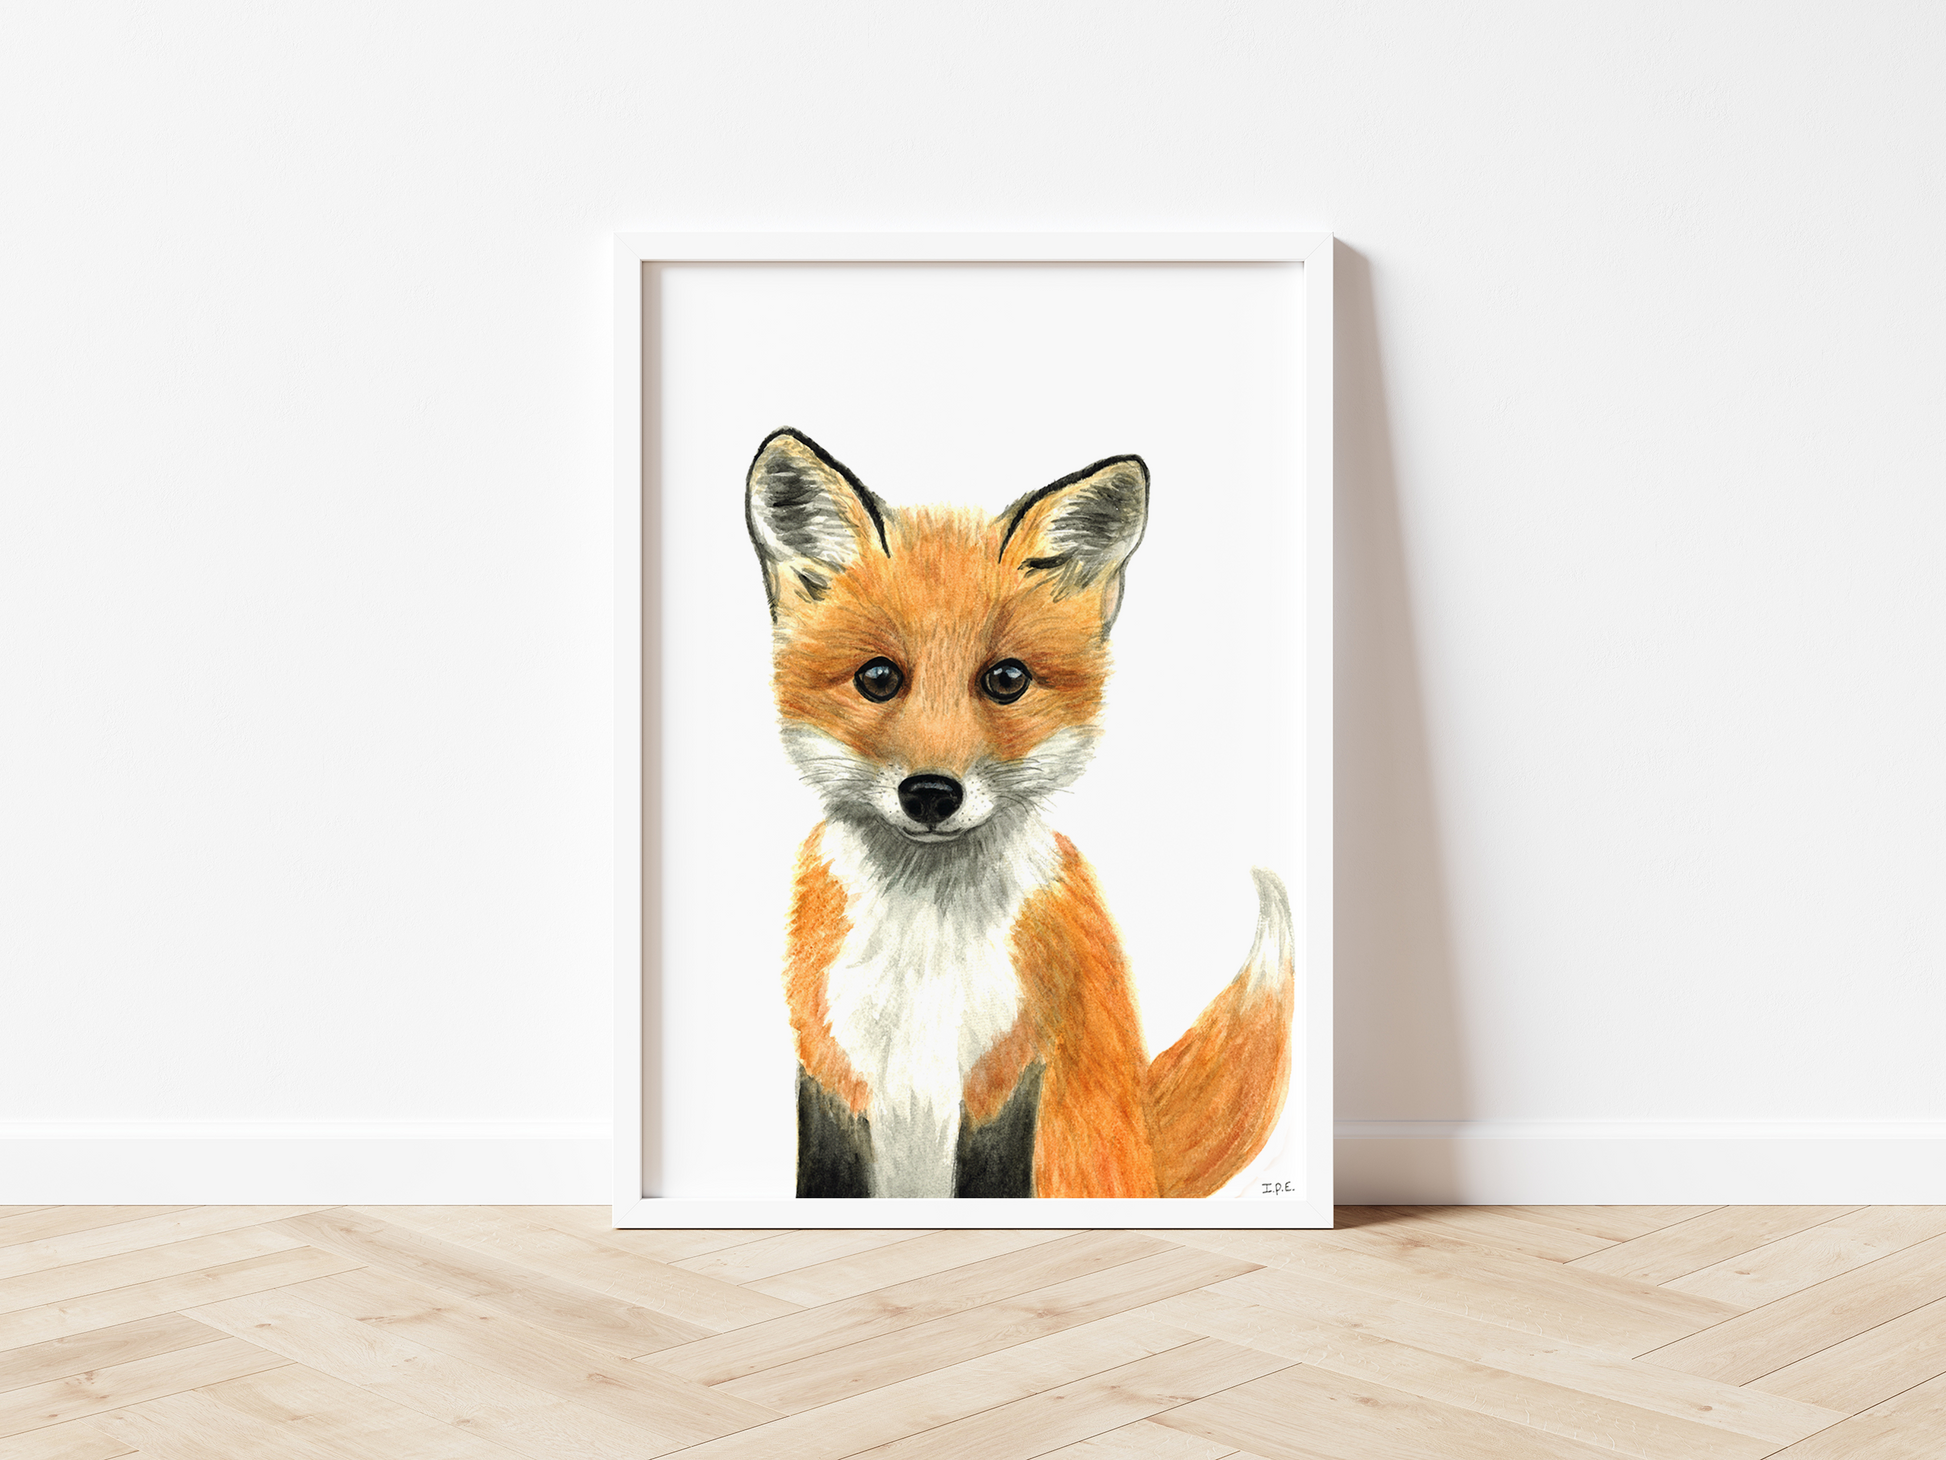 Framed wall art print of a fox, on wooden floor